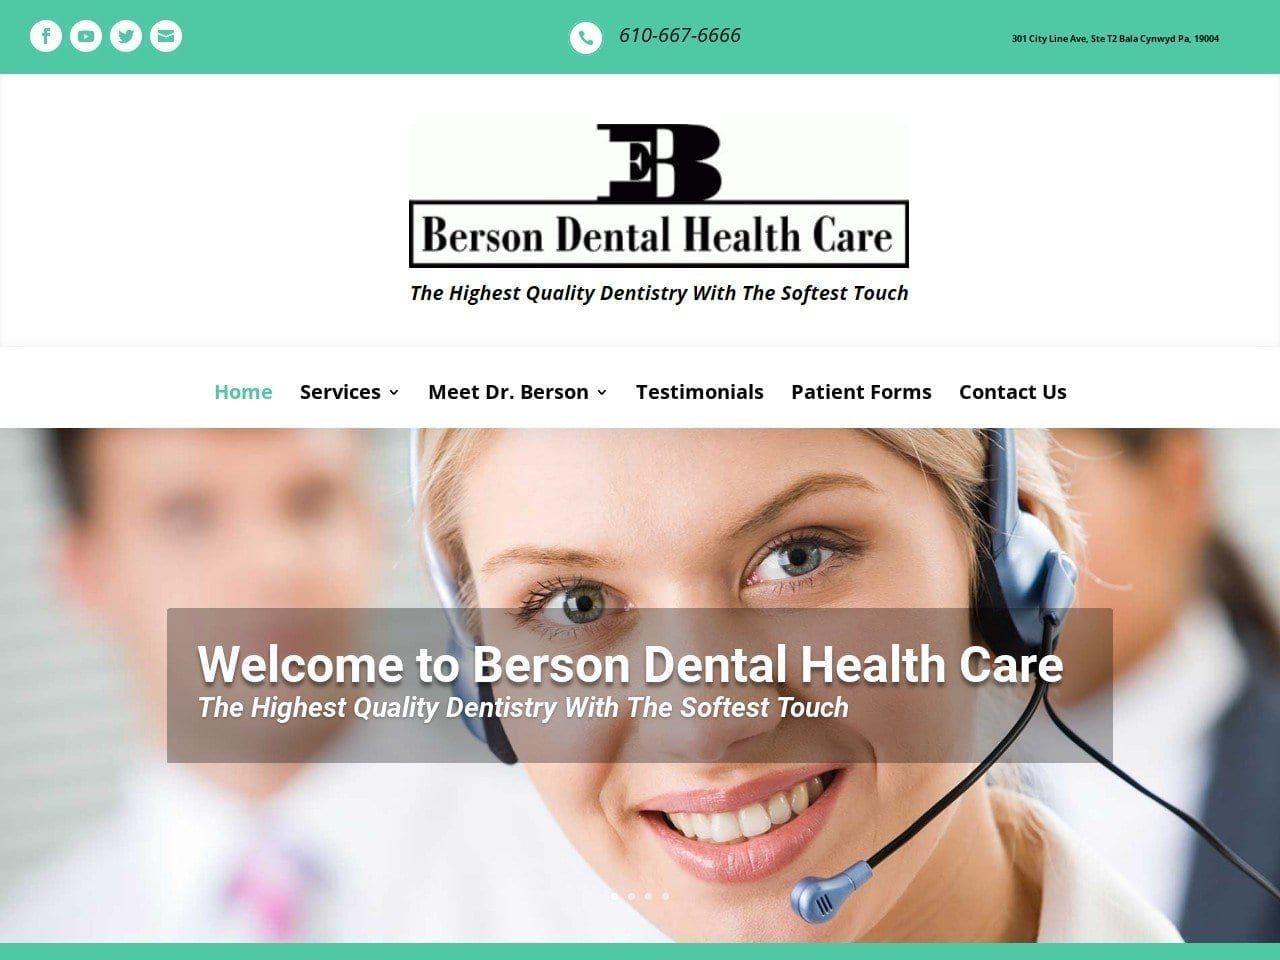 Berson Dental Health Care Website Screenshot from bersondental.com